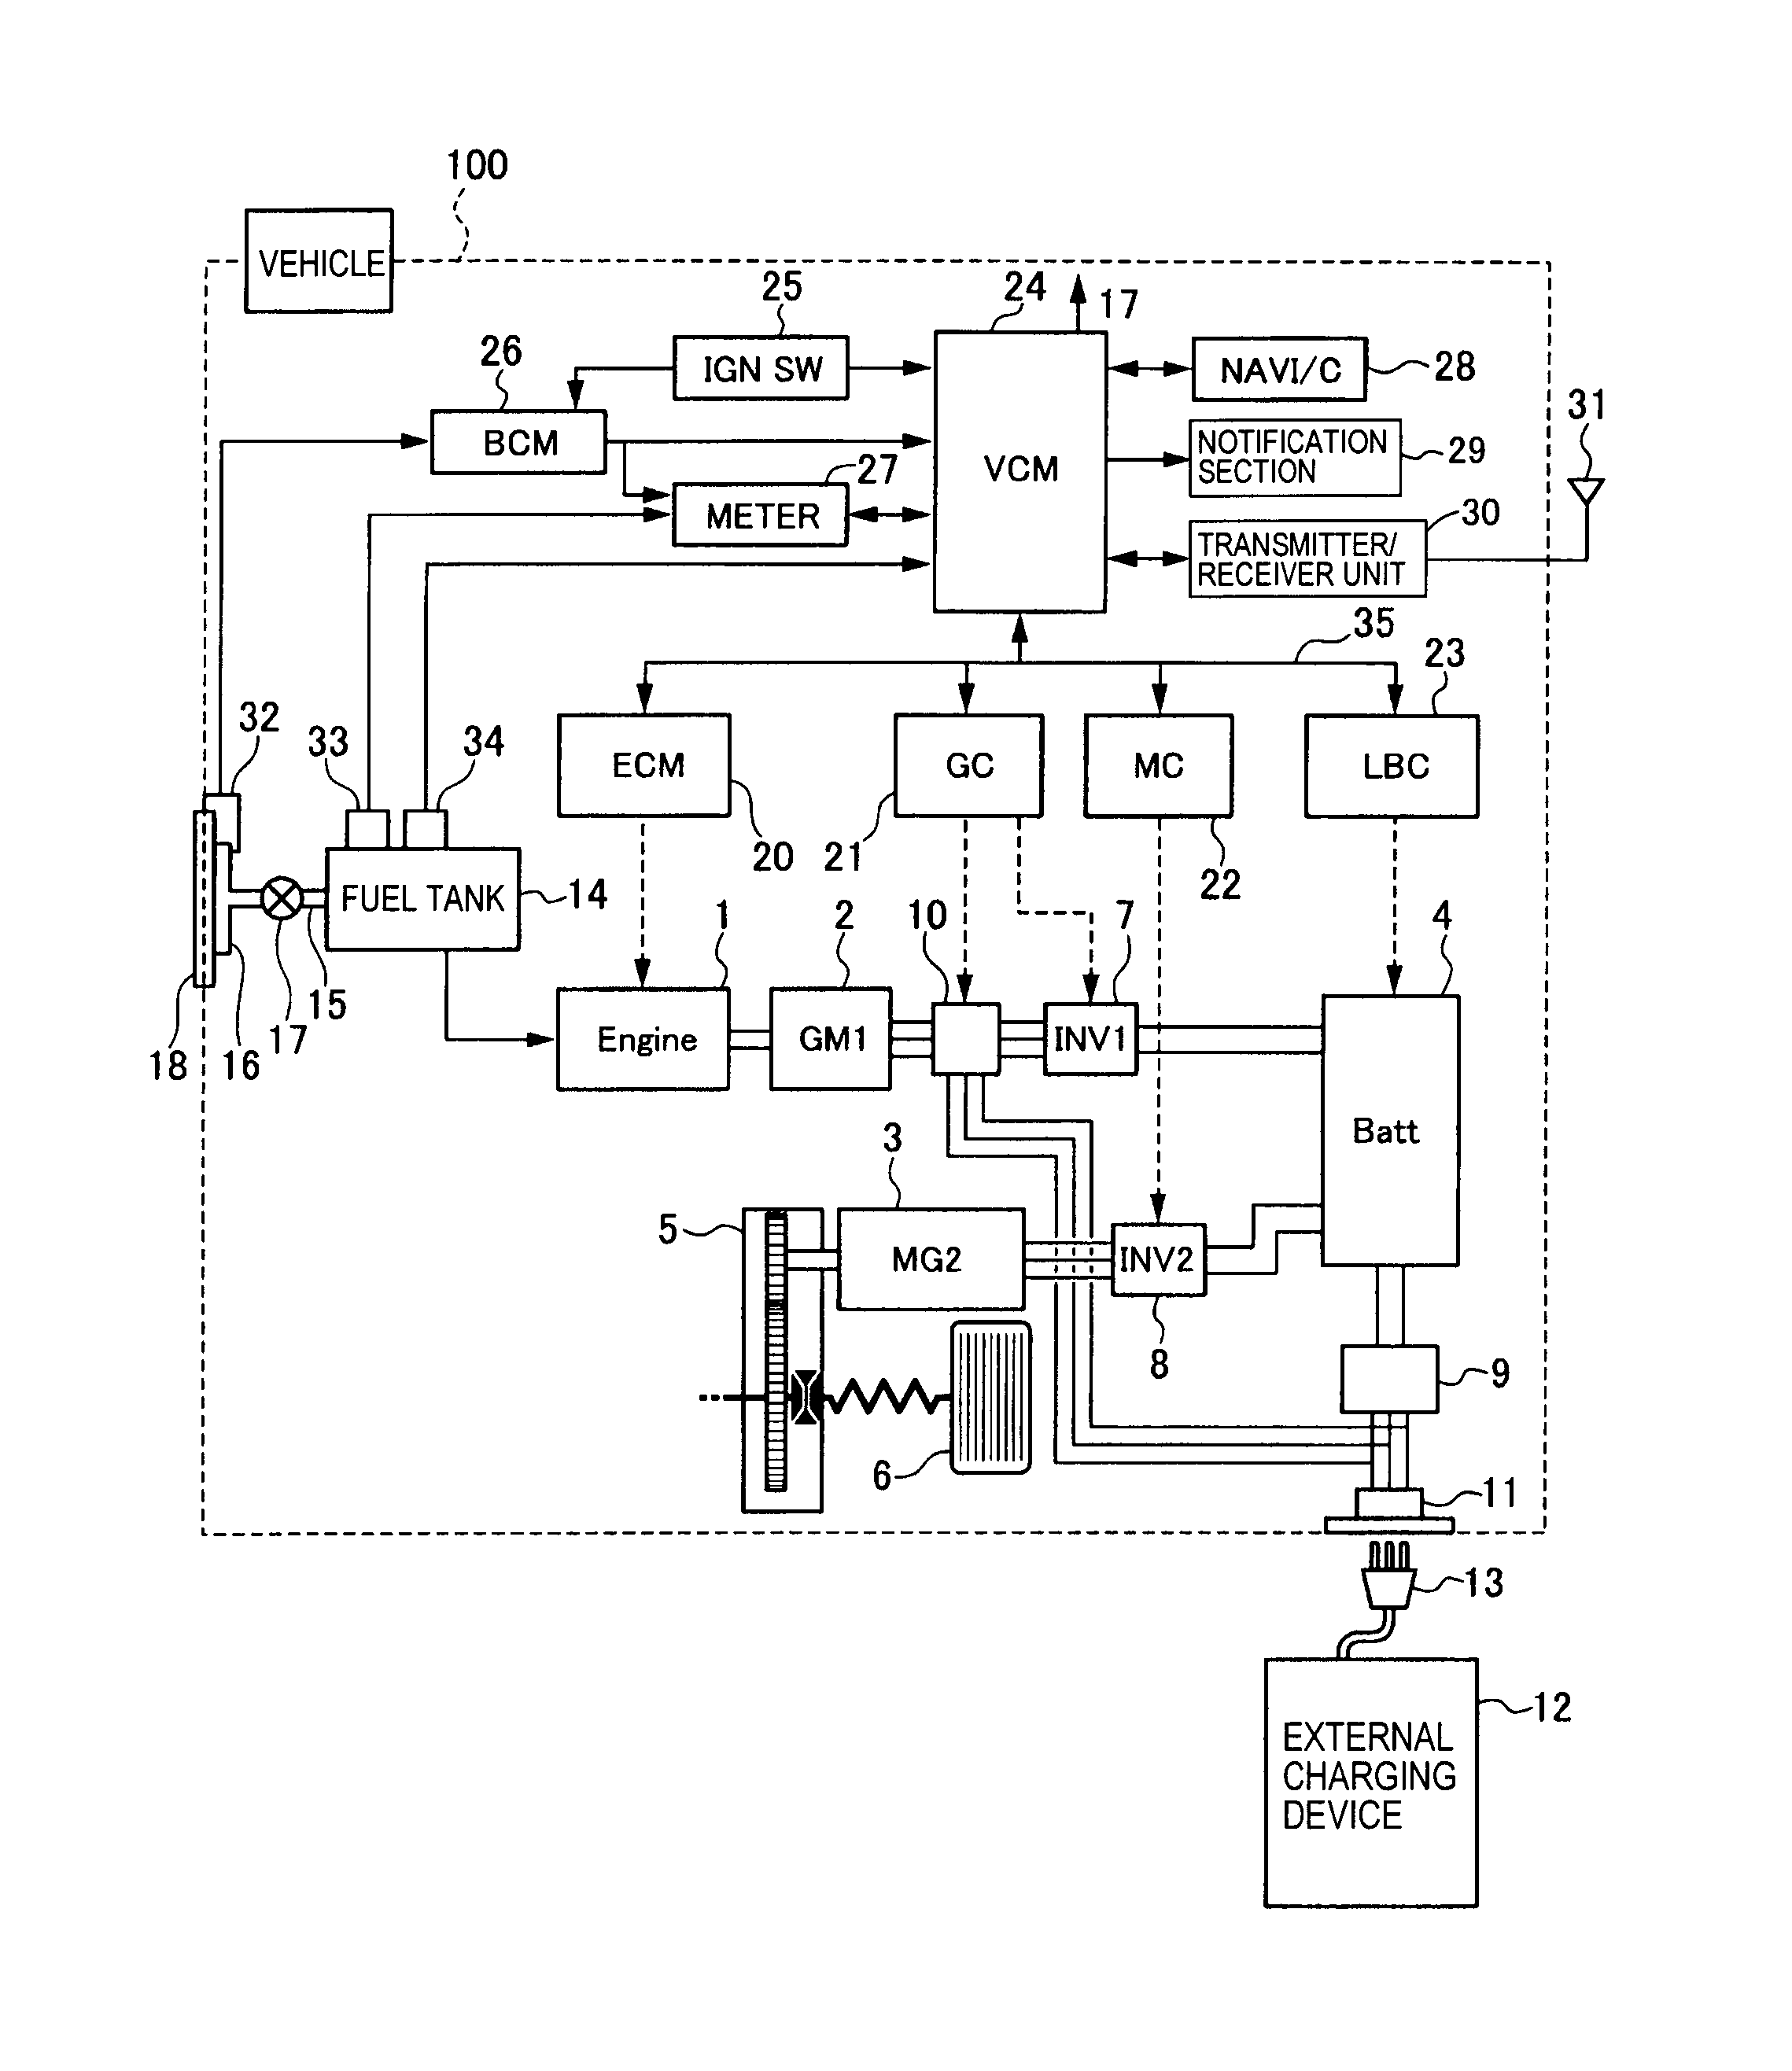 sony cdx gt40u wiring diagram